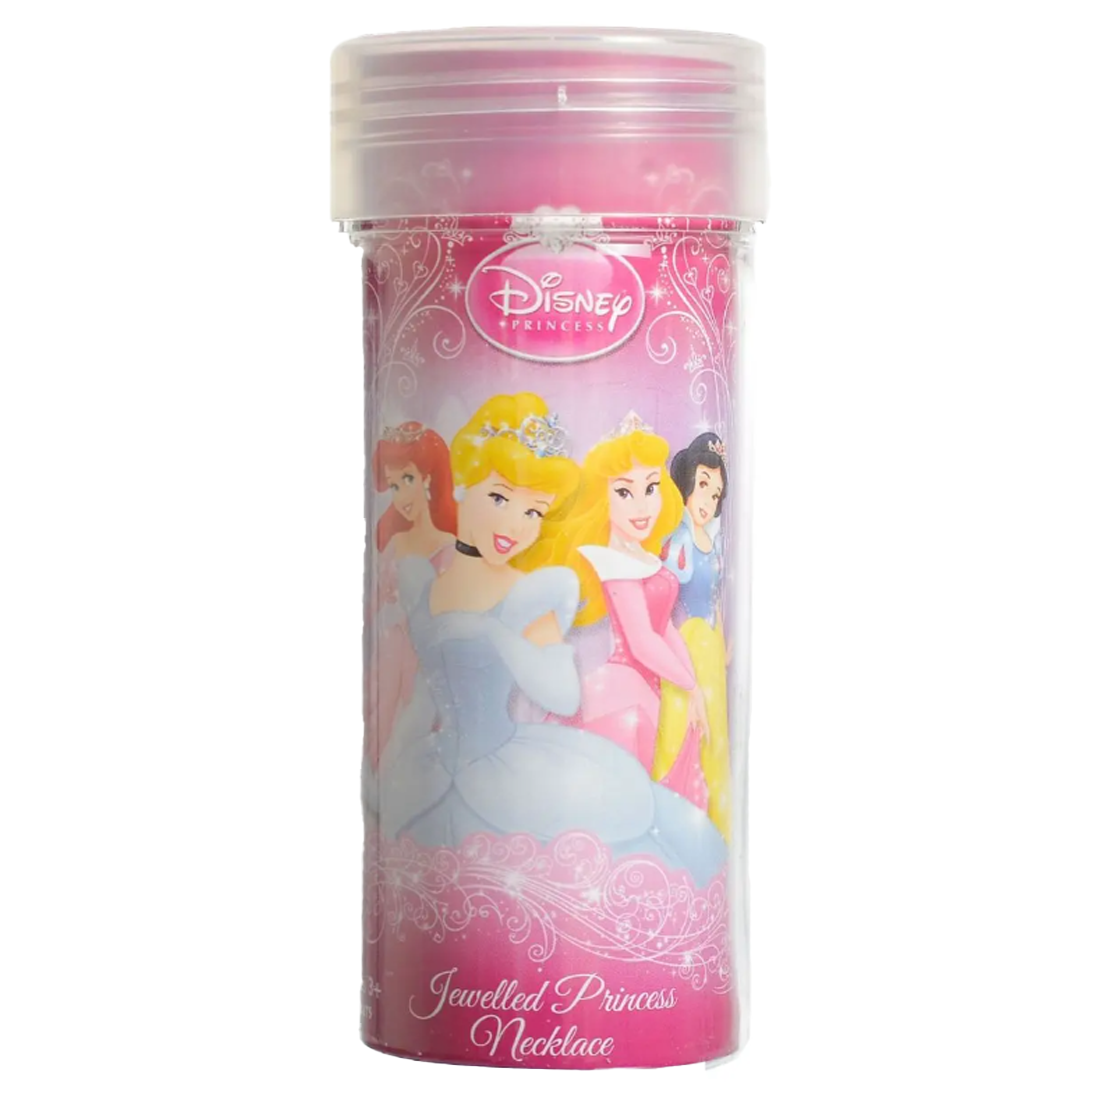 Disney Princess Aurora Necklace Girl's Costume Accessory